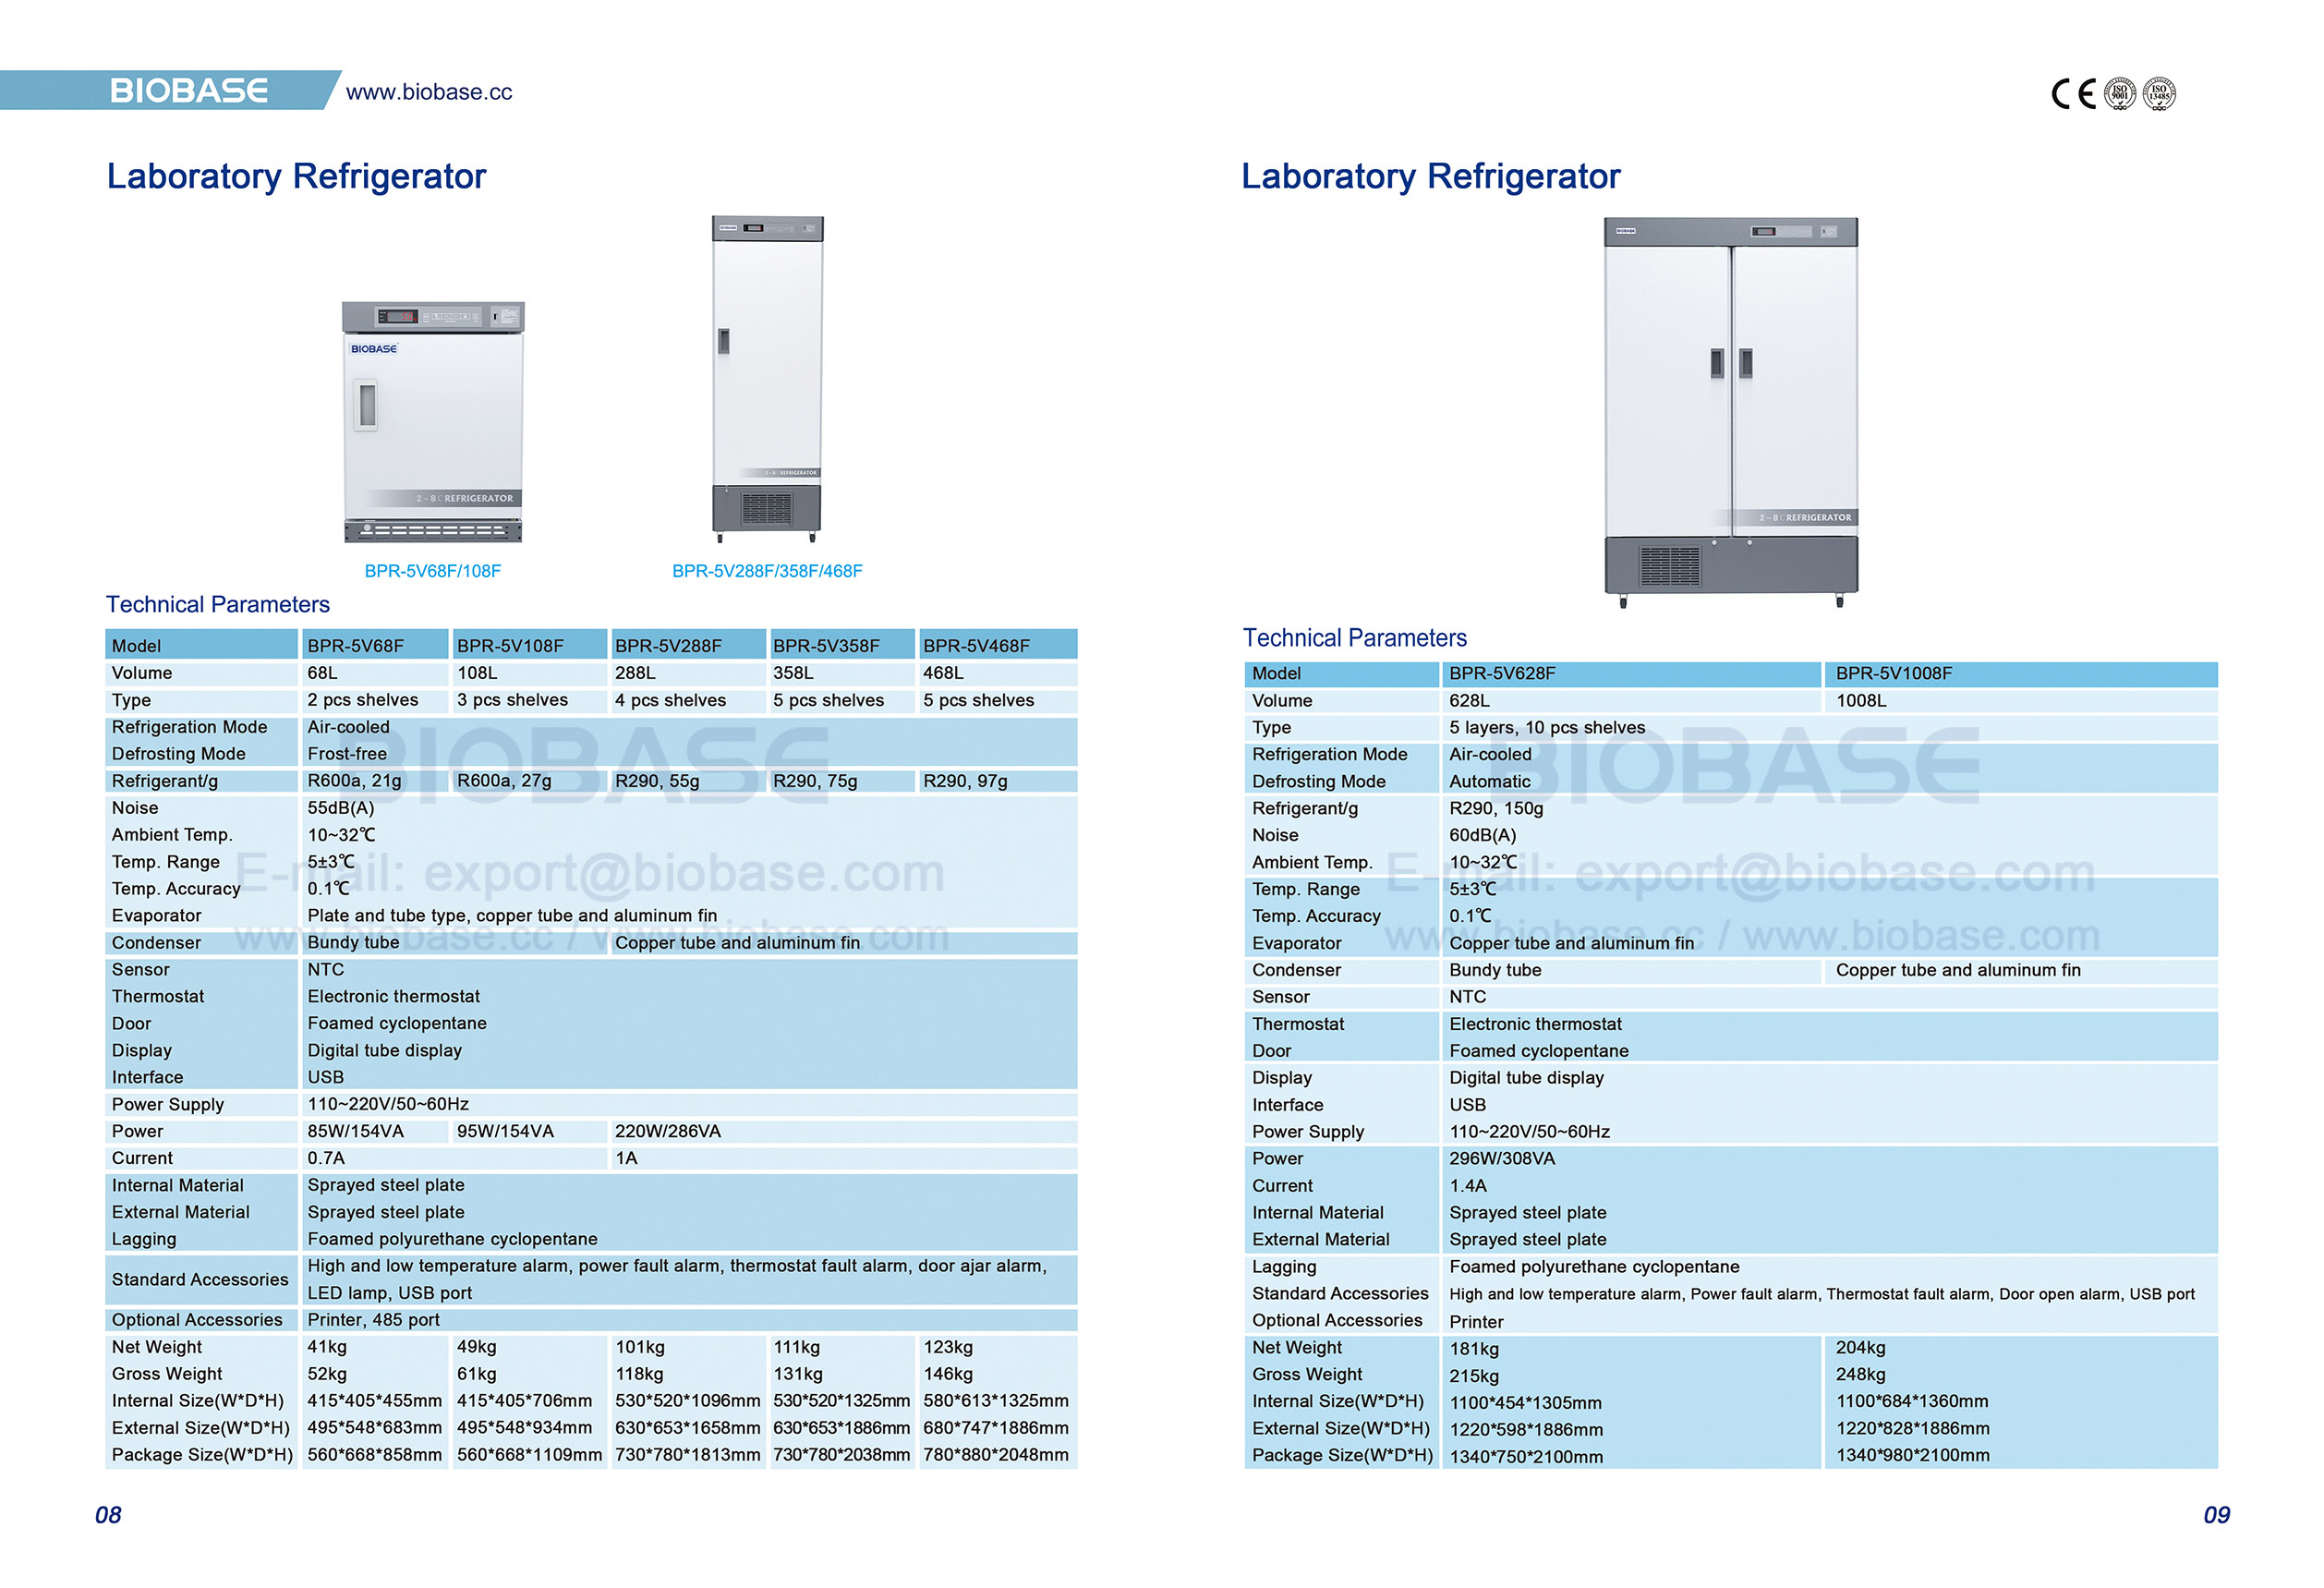 8-9 Laboratory Refrigerator